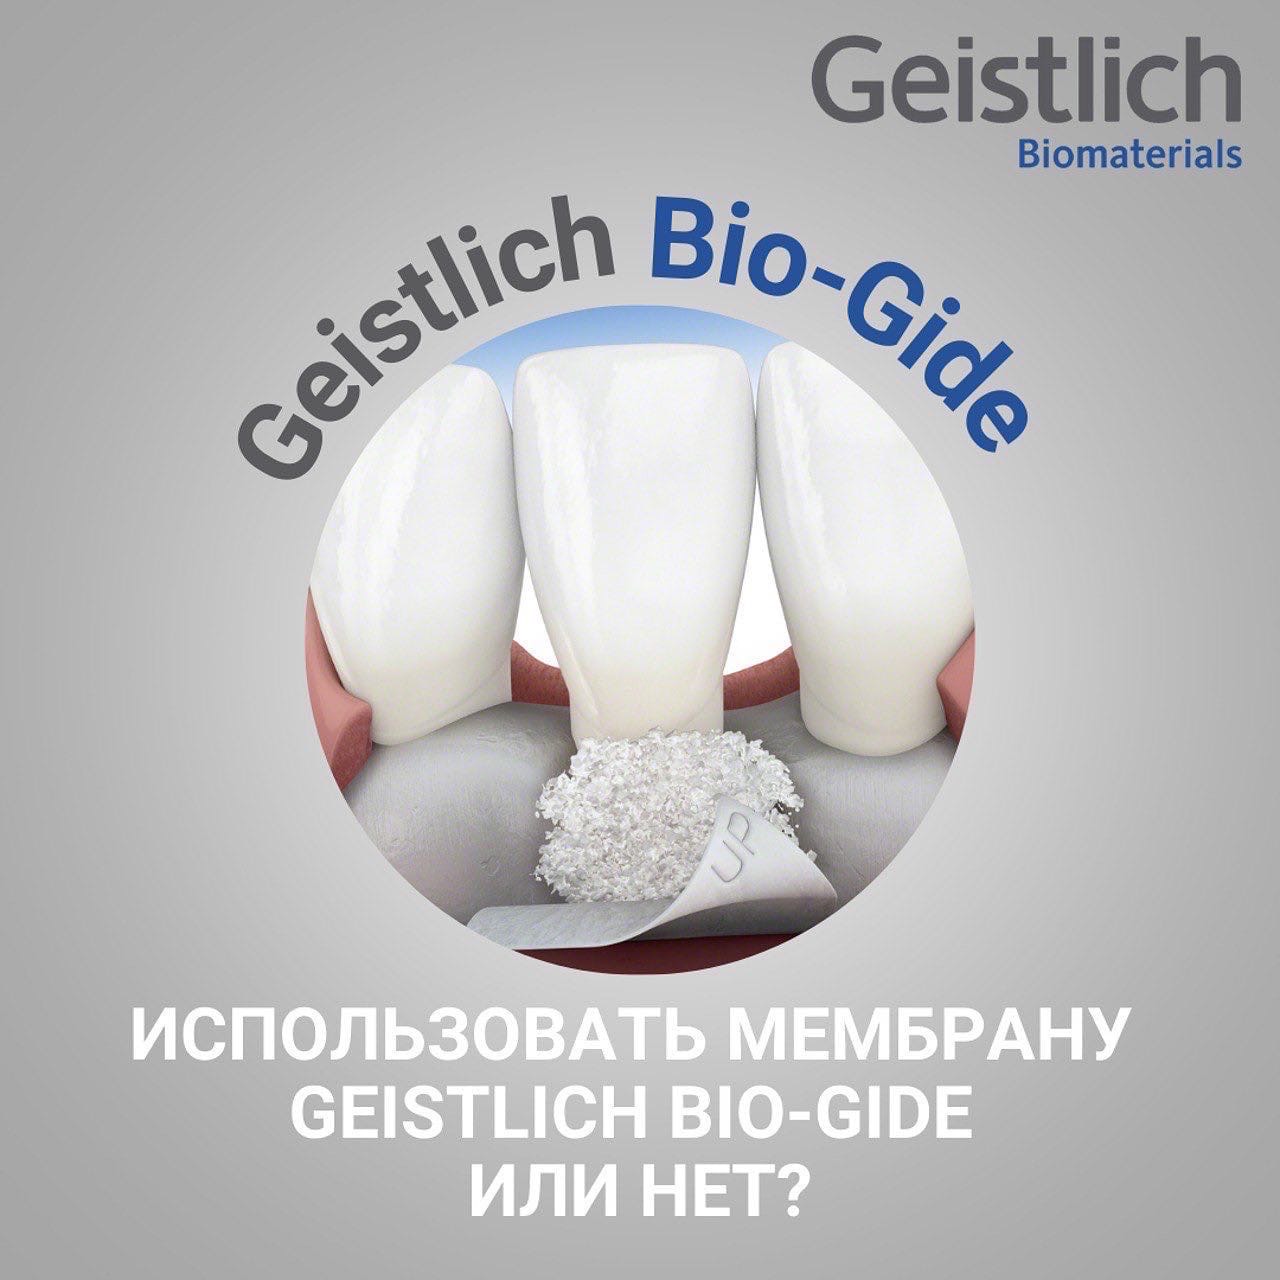 Комбинация Geistlich Bio-Gide, Geistlich Bio-Оss и деривата эмалевого матрикса